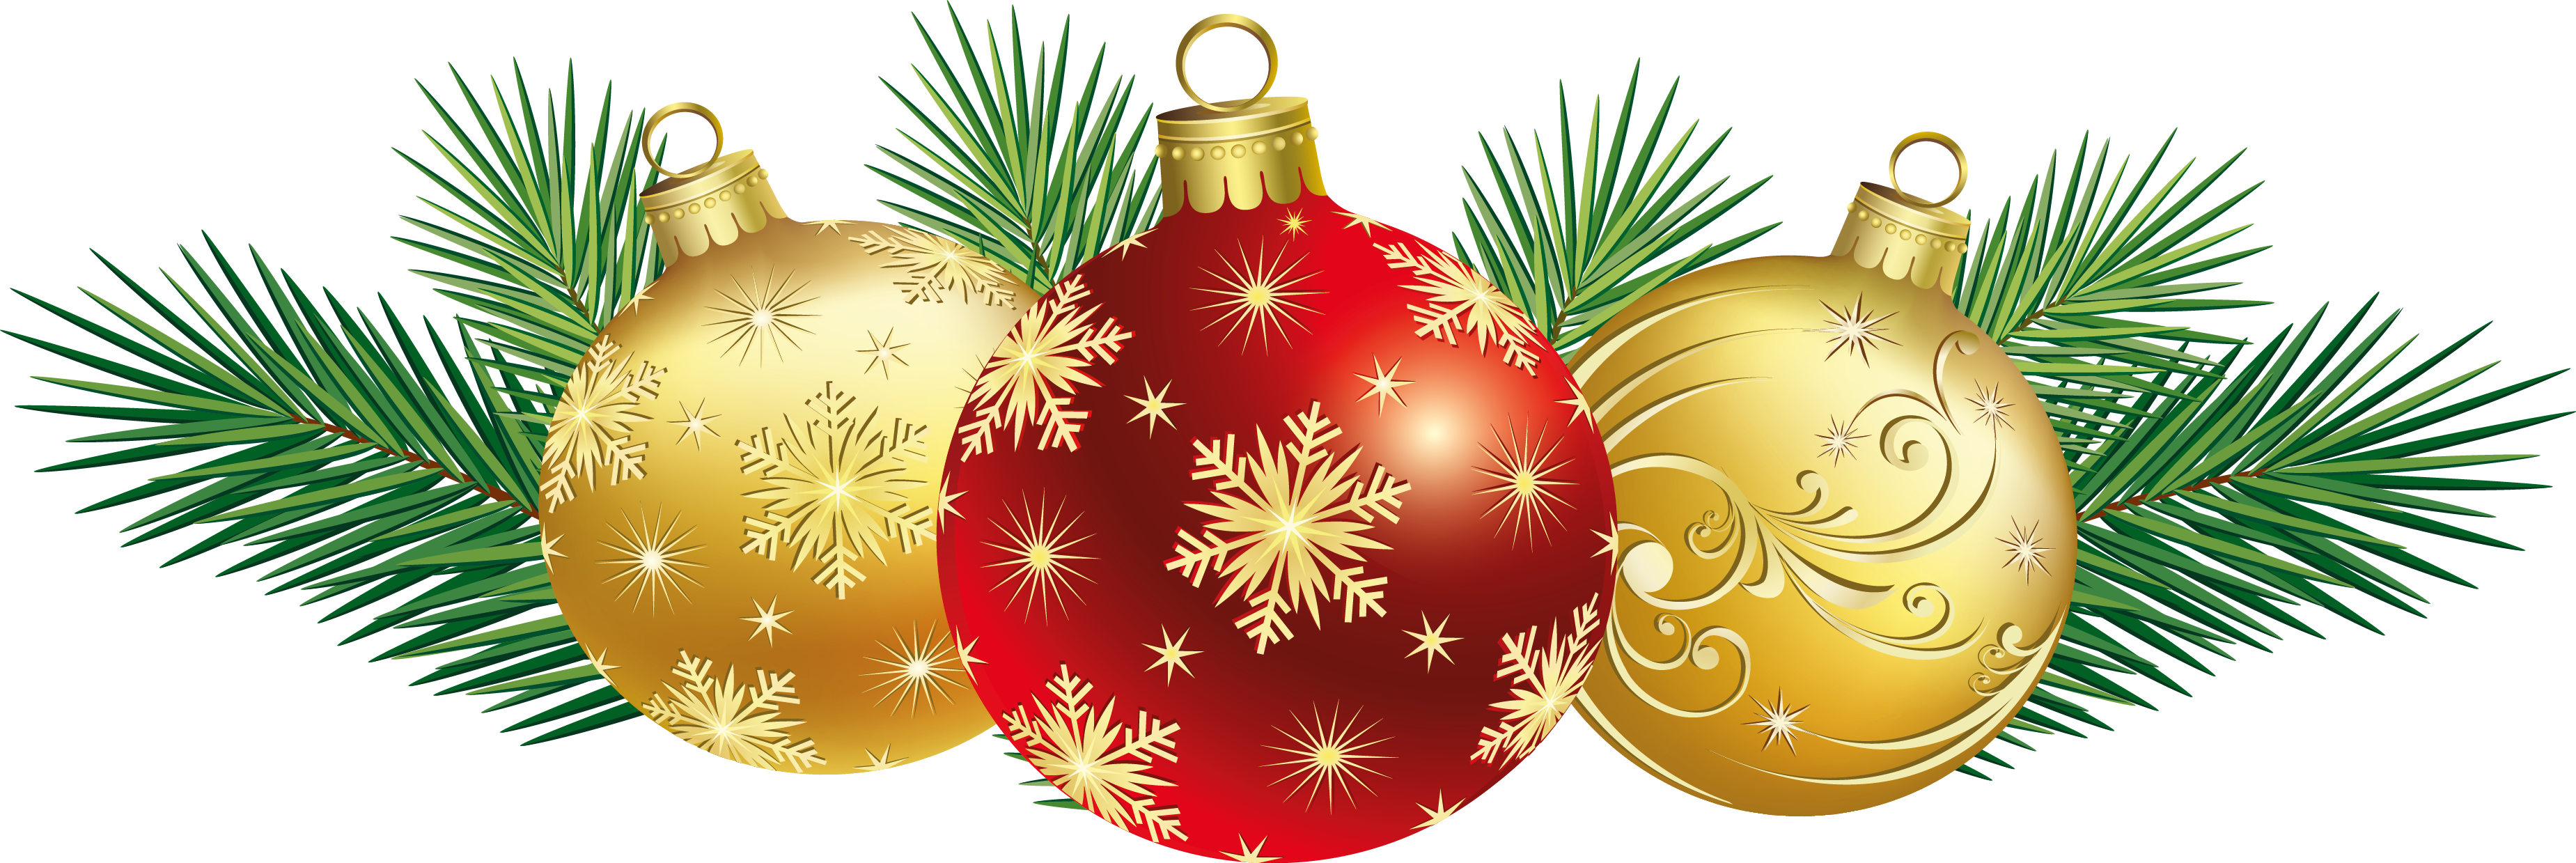 Christmas Balls Decoration Png Clipart - Christmas Ornament, Transparent background PNG HD thumbnail